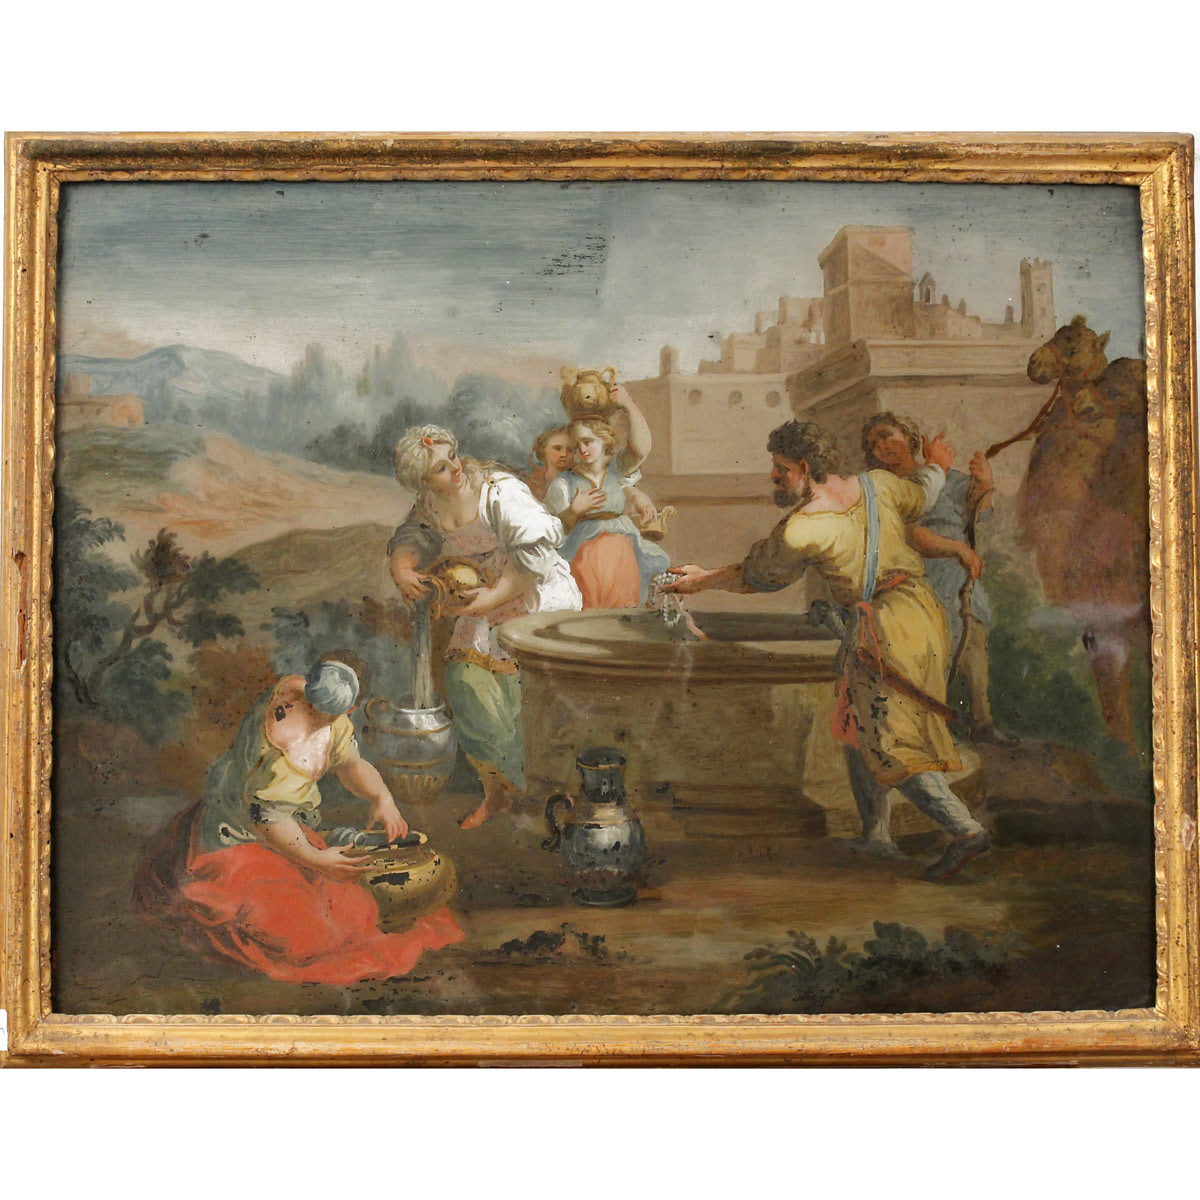 Scuola napoletana del secolo XVIII "Giacobbe e Rachele al pozzo" - 18th century Neapolitan school "Jacob and Rachel at the well"